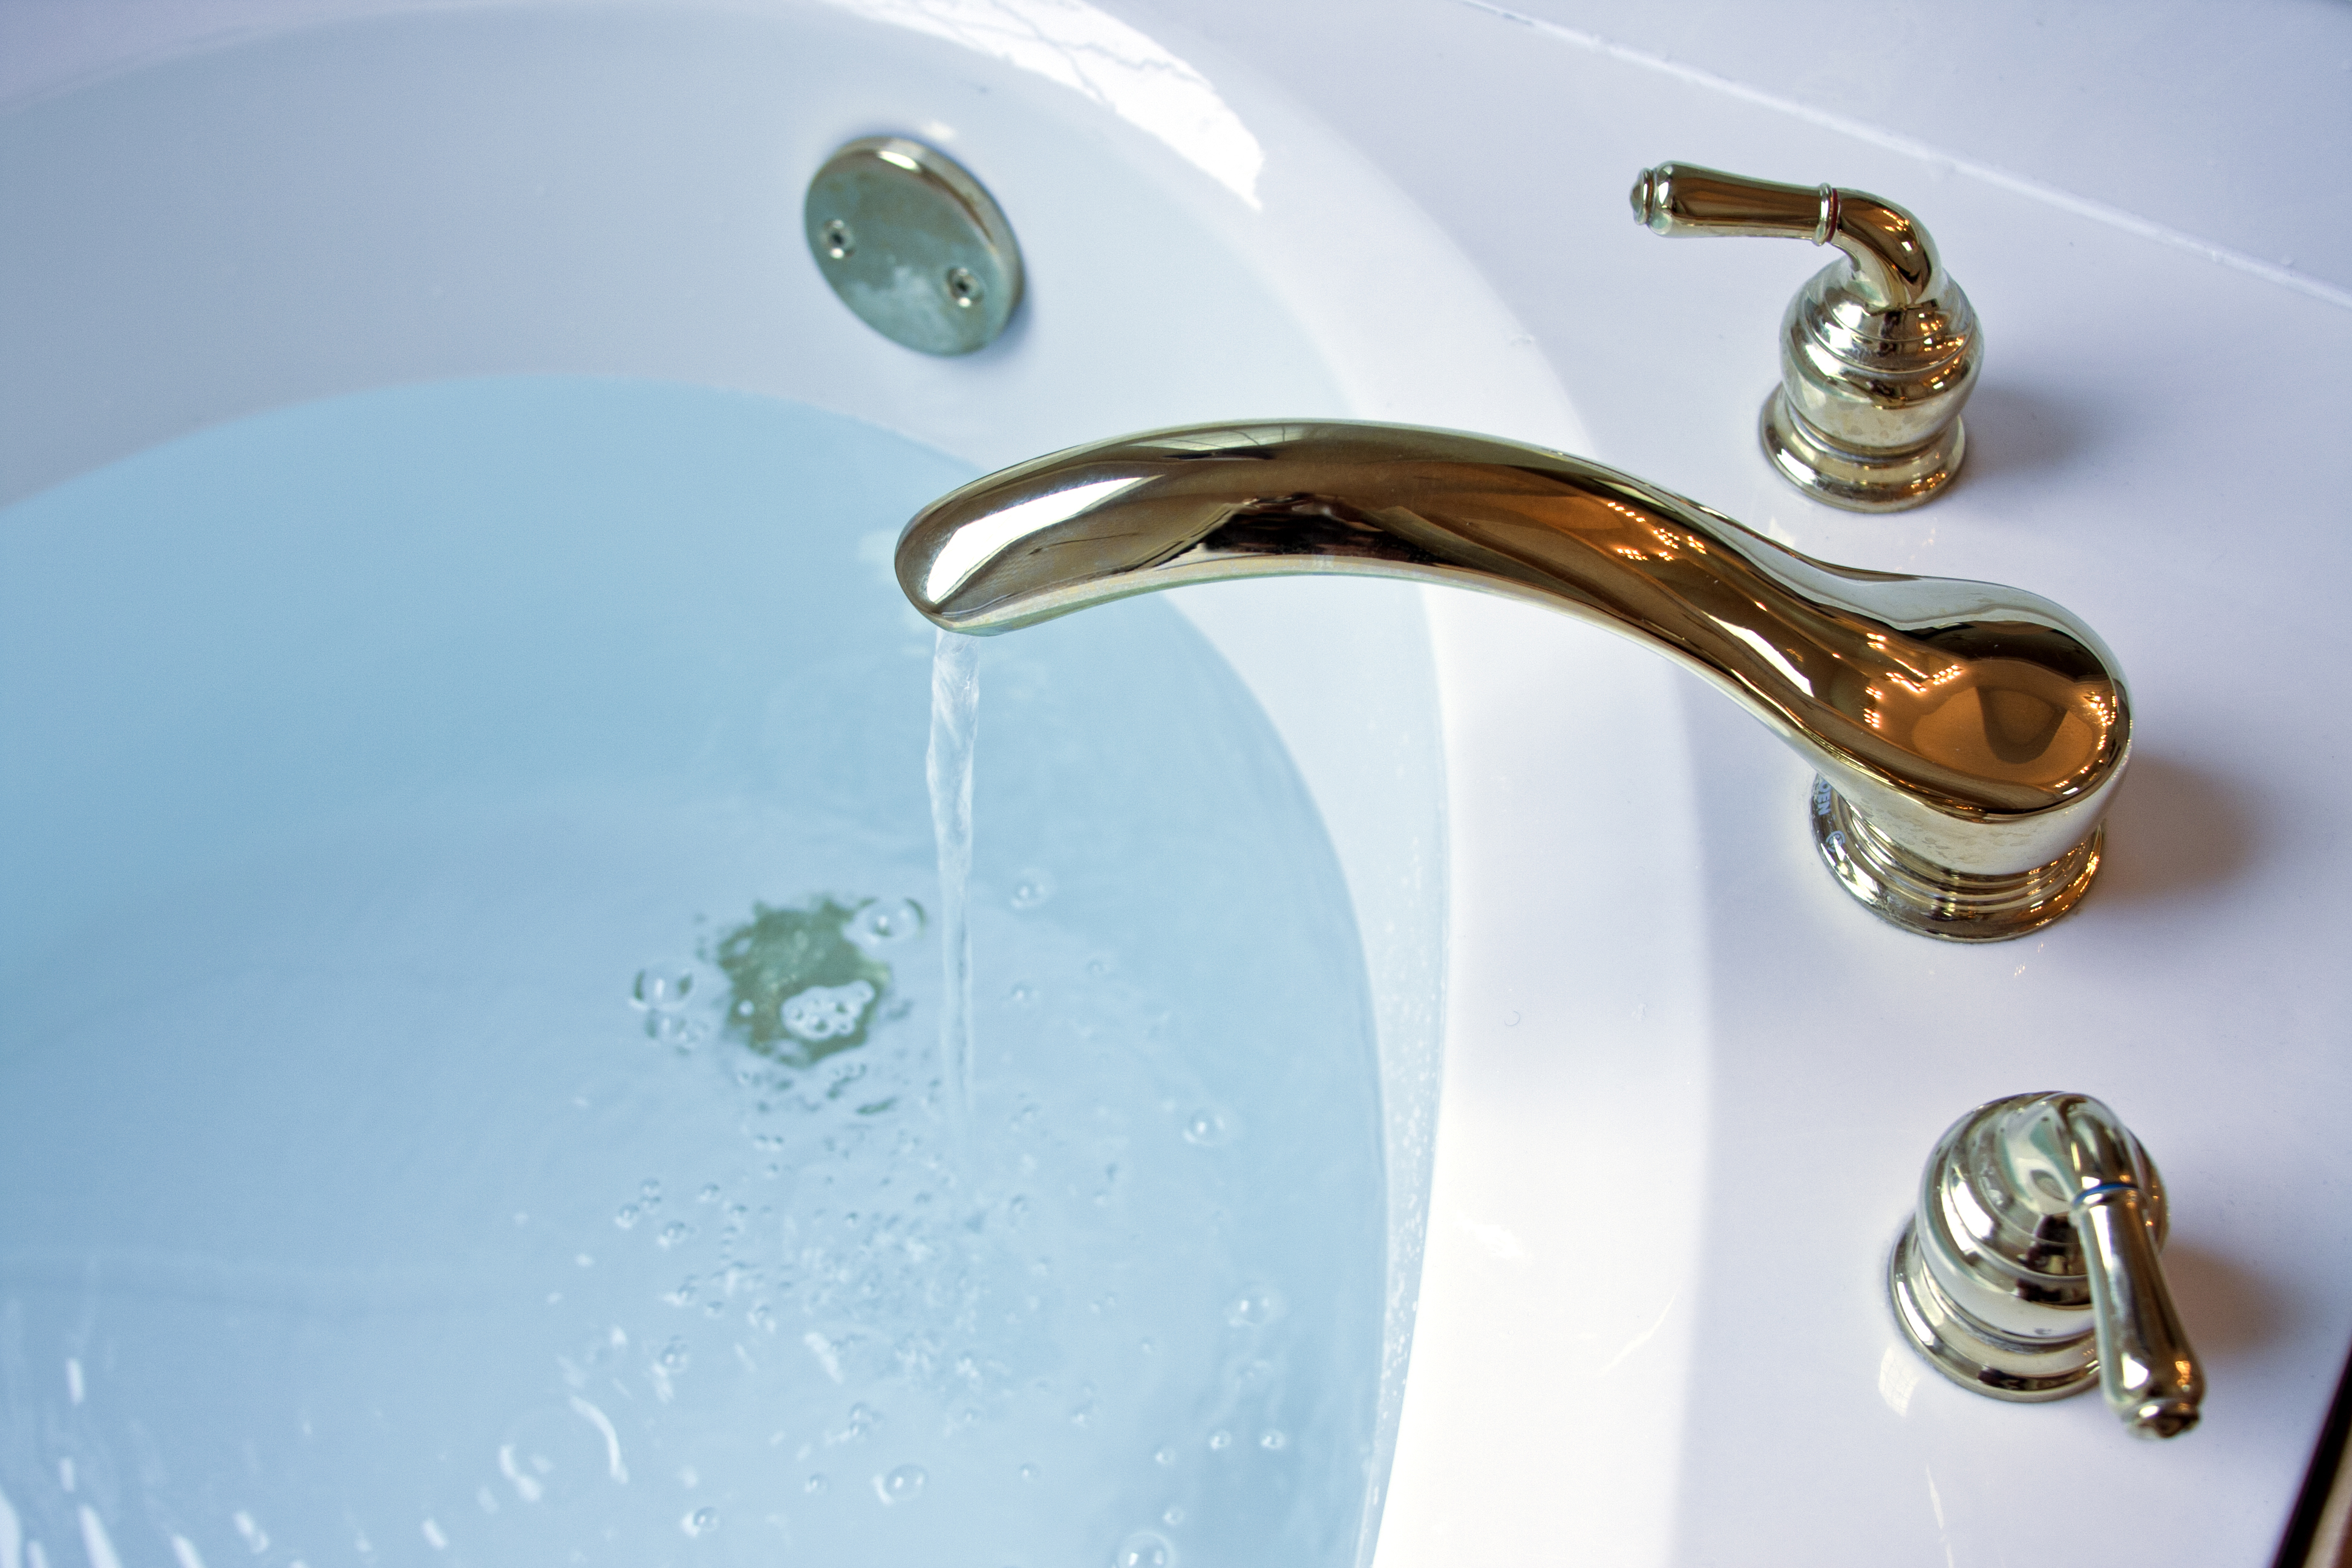 3 Ways to Block a Bathtub Drain Without A Plug